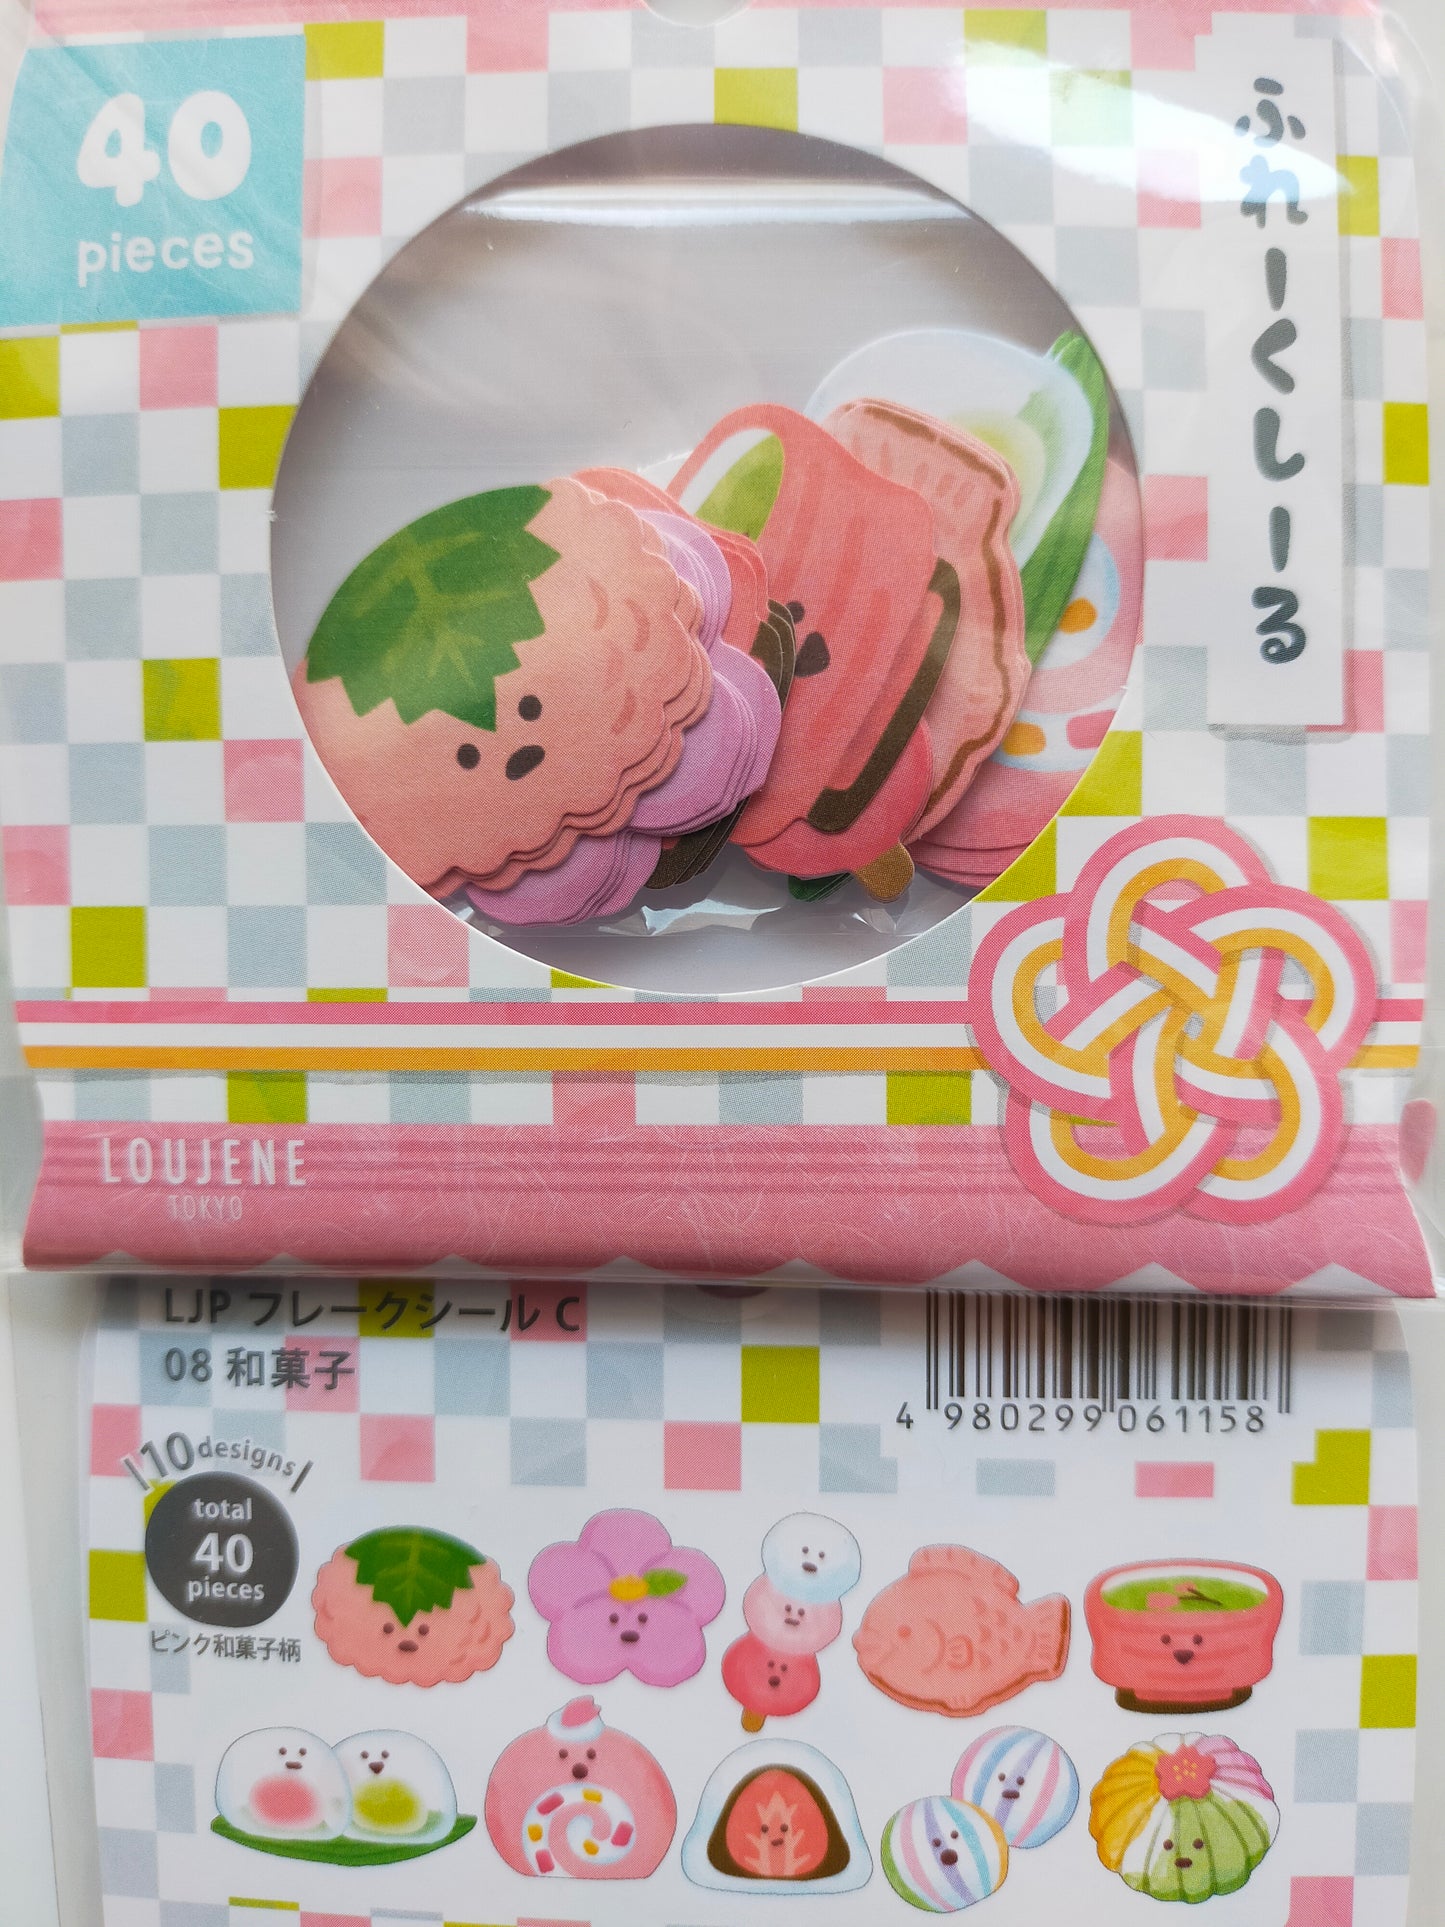 FLAKE STICKER  Japanese Culture , LOUJENE_ Wagashi Pink / Wagashi Green / School Lunch / School Tools